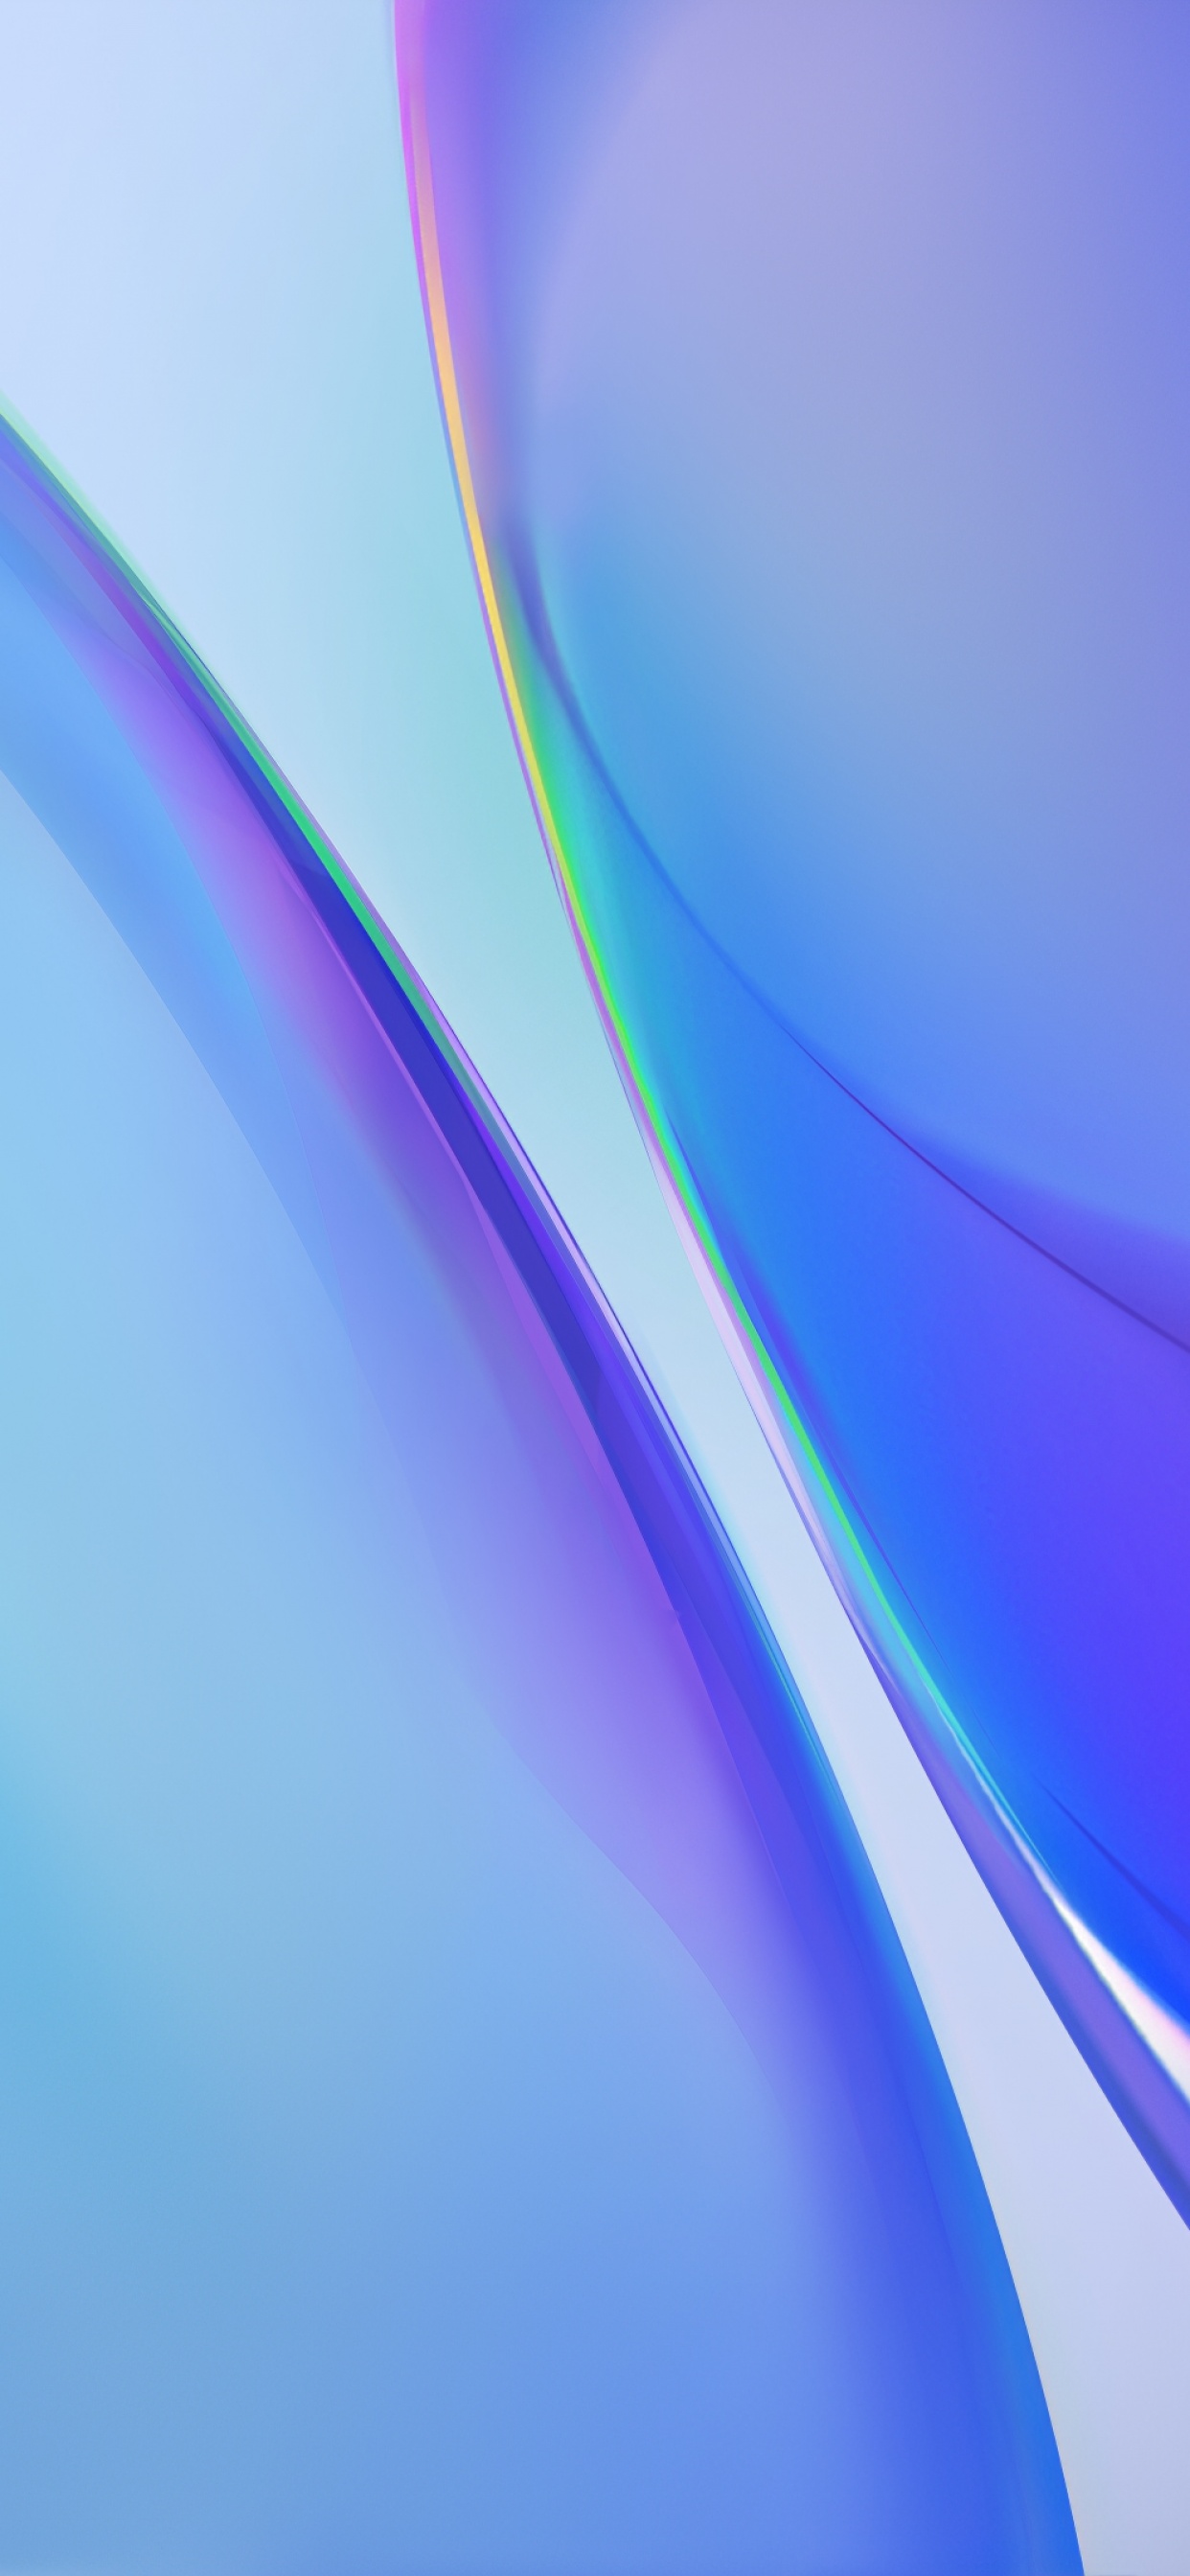 Android 10 Wallpaper 4K, Stock, Vivo NEX, Gradients, Blue, Abstract, #476